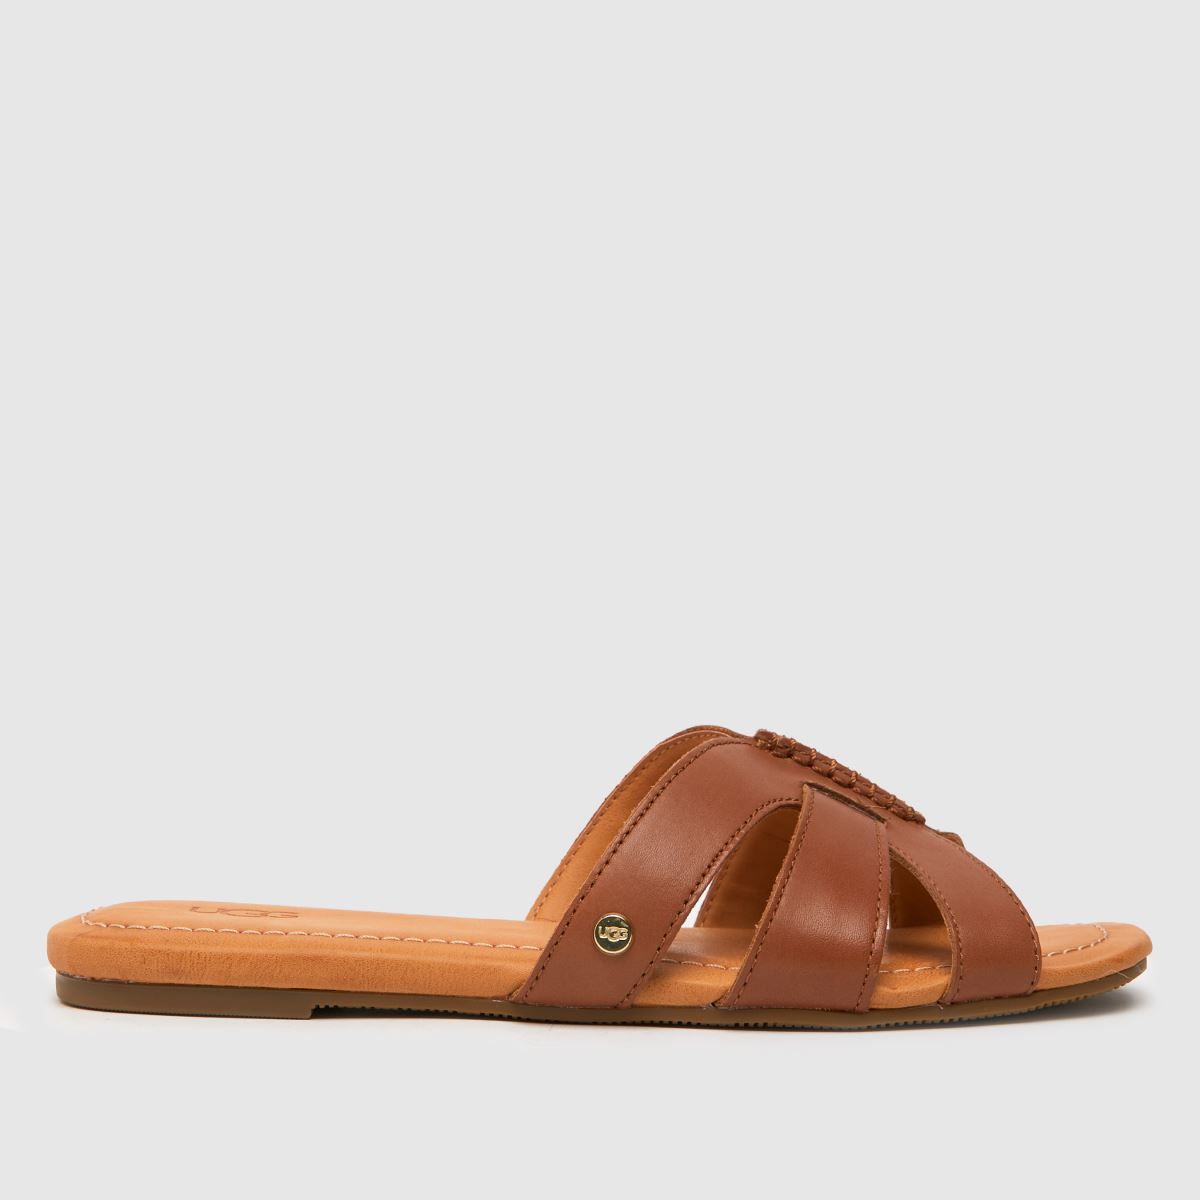 UGG brown teague sandals | Schuh